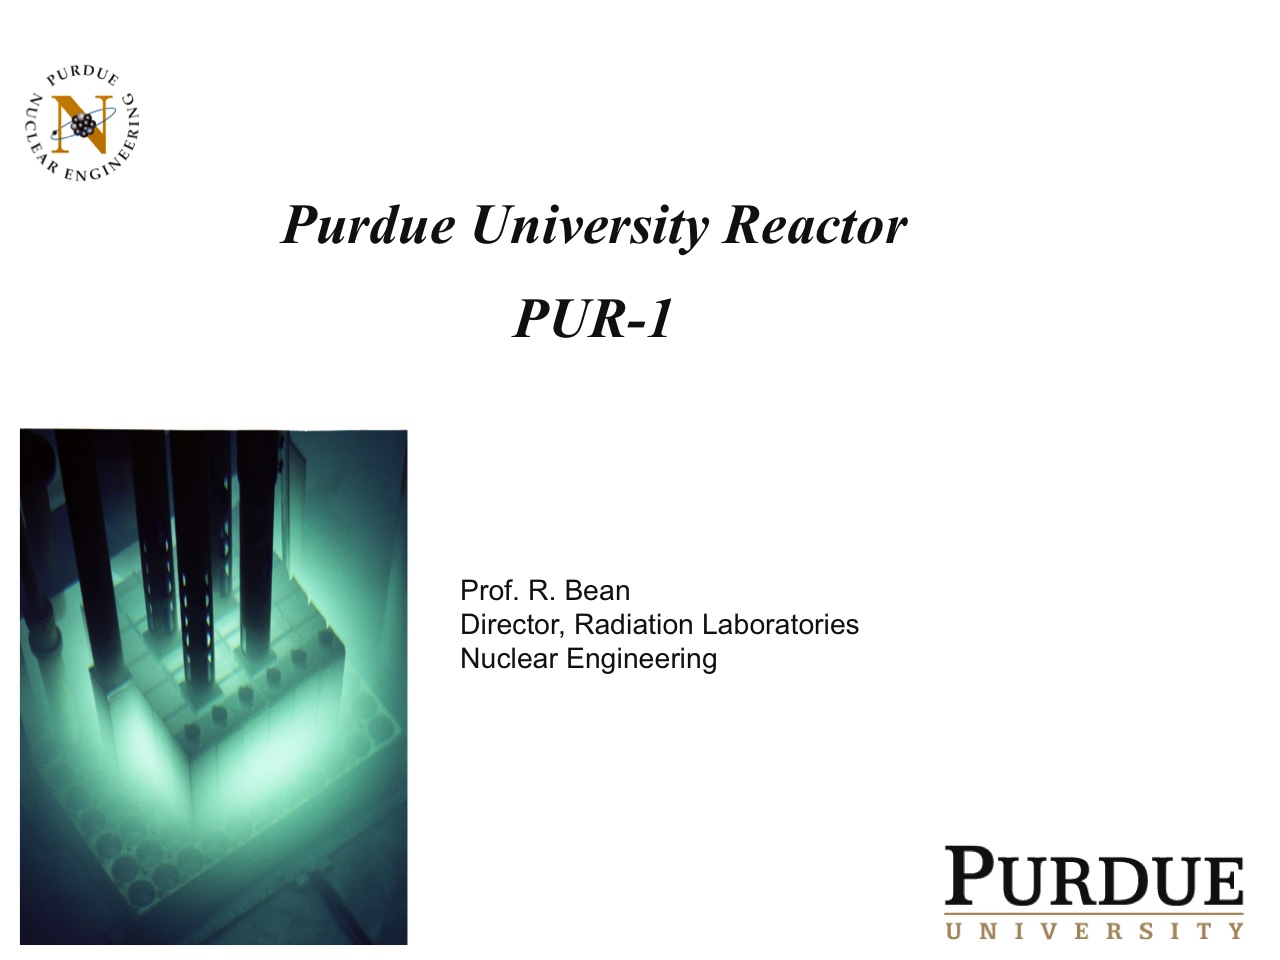 Purdue University Reactor PUR-1